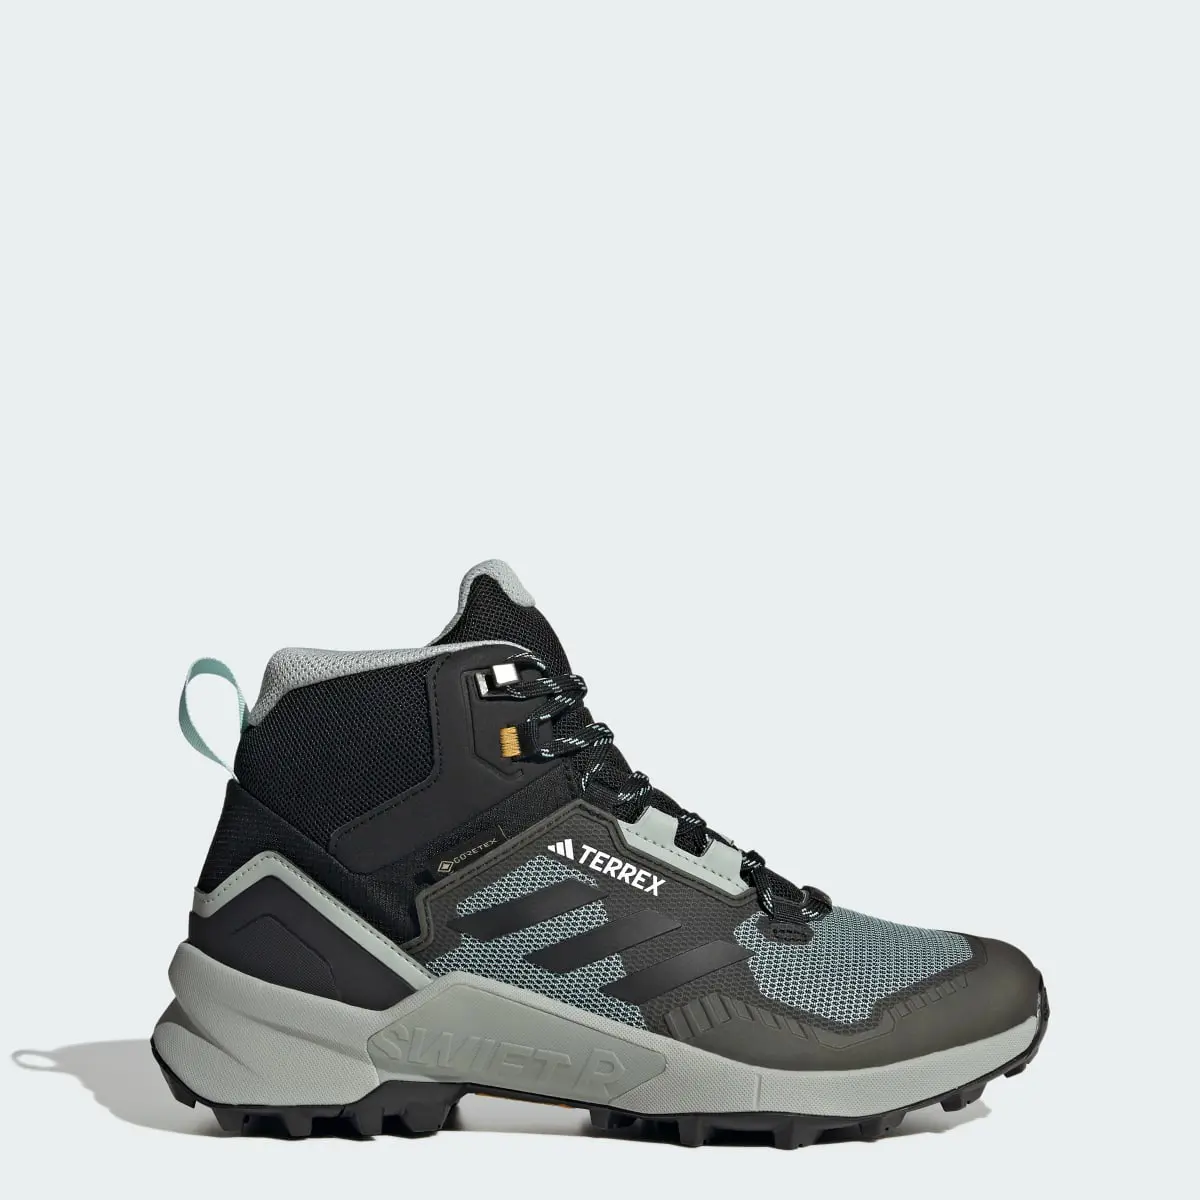 Adidas Terrex Swift R3 Mid GORE-TEX Hiking Shoes. 1